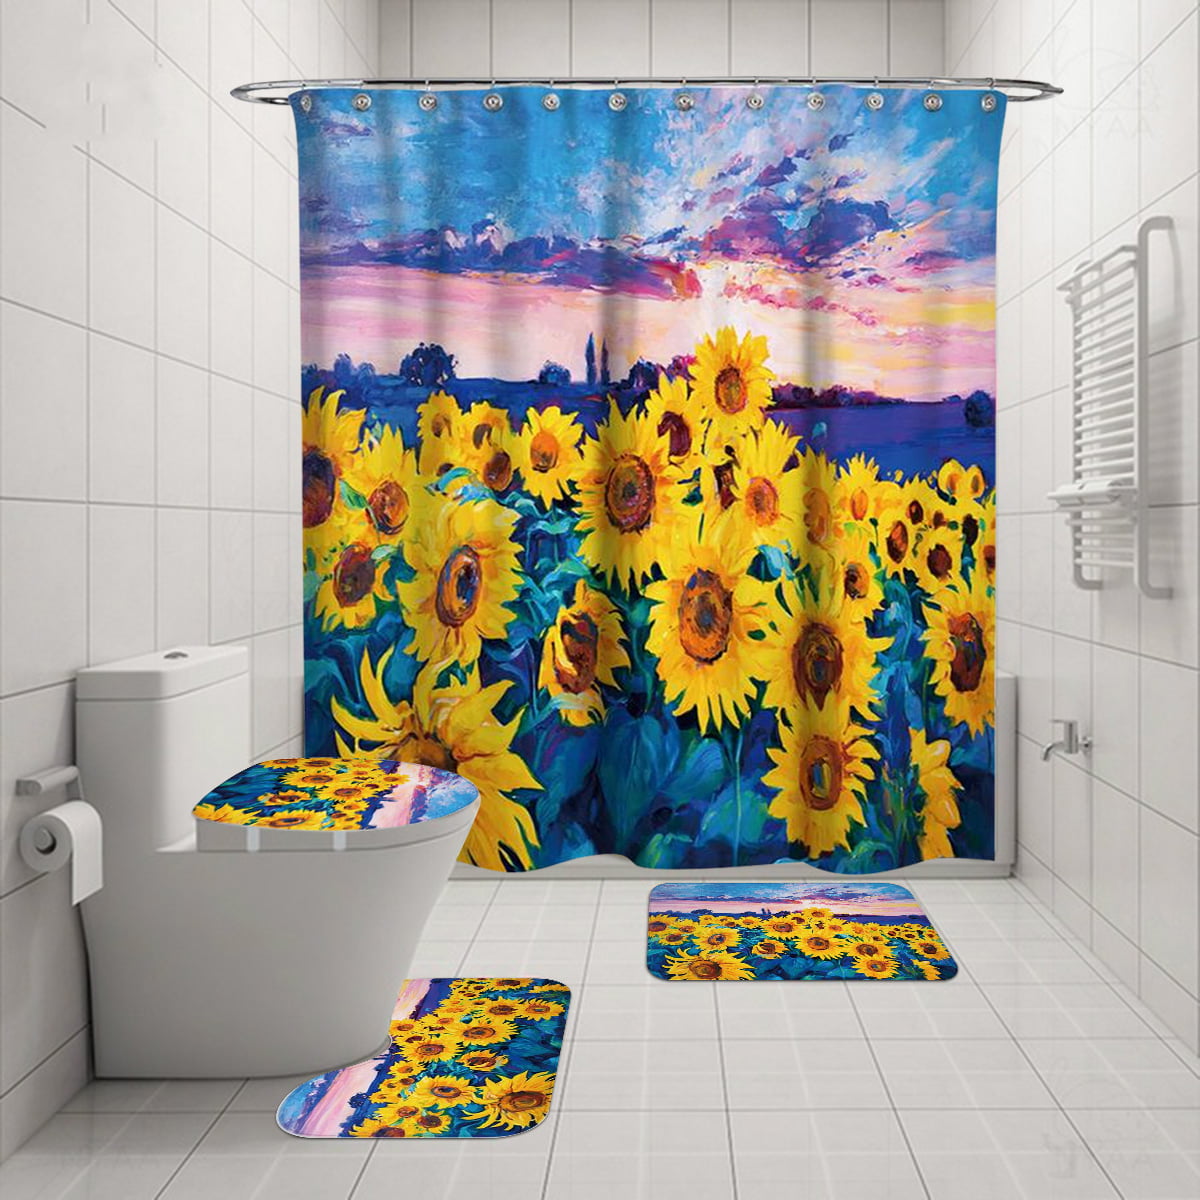 Shepherd dog and sunflower Shower Curtain Home Bathroom Decor Fabric 12hooks 